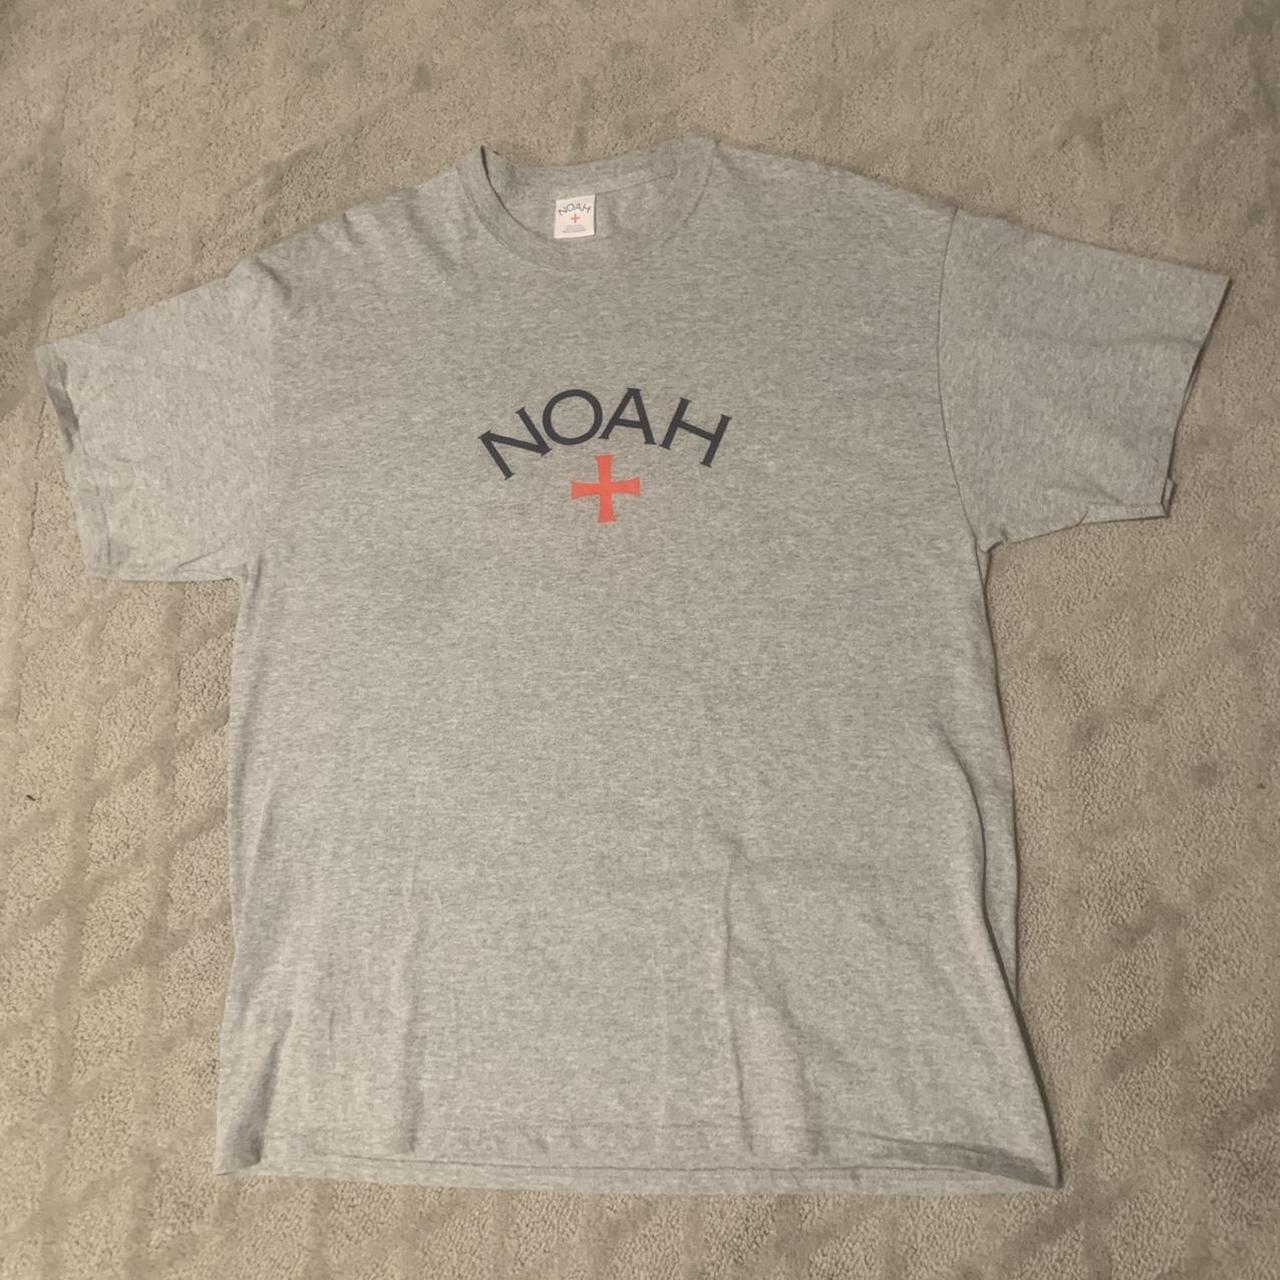 Product Image 1 - Noah Core Logo Tee

Tagged Size